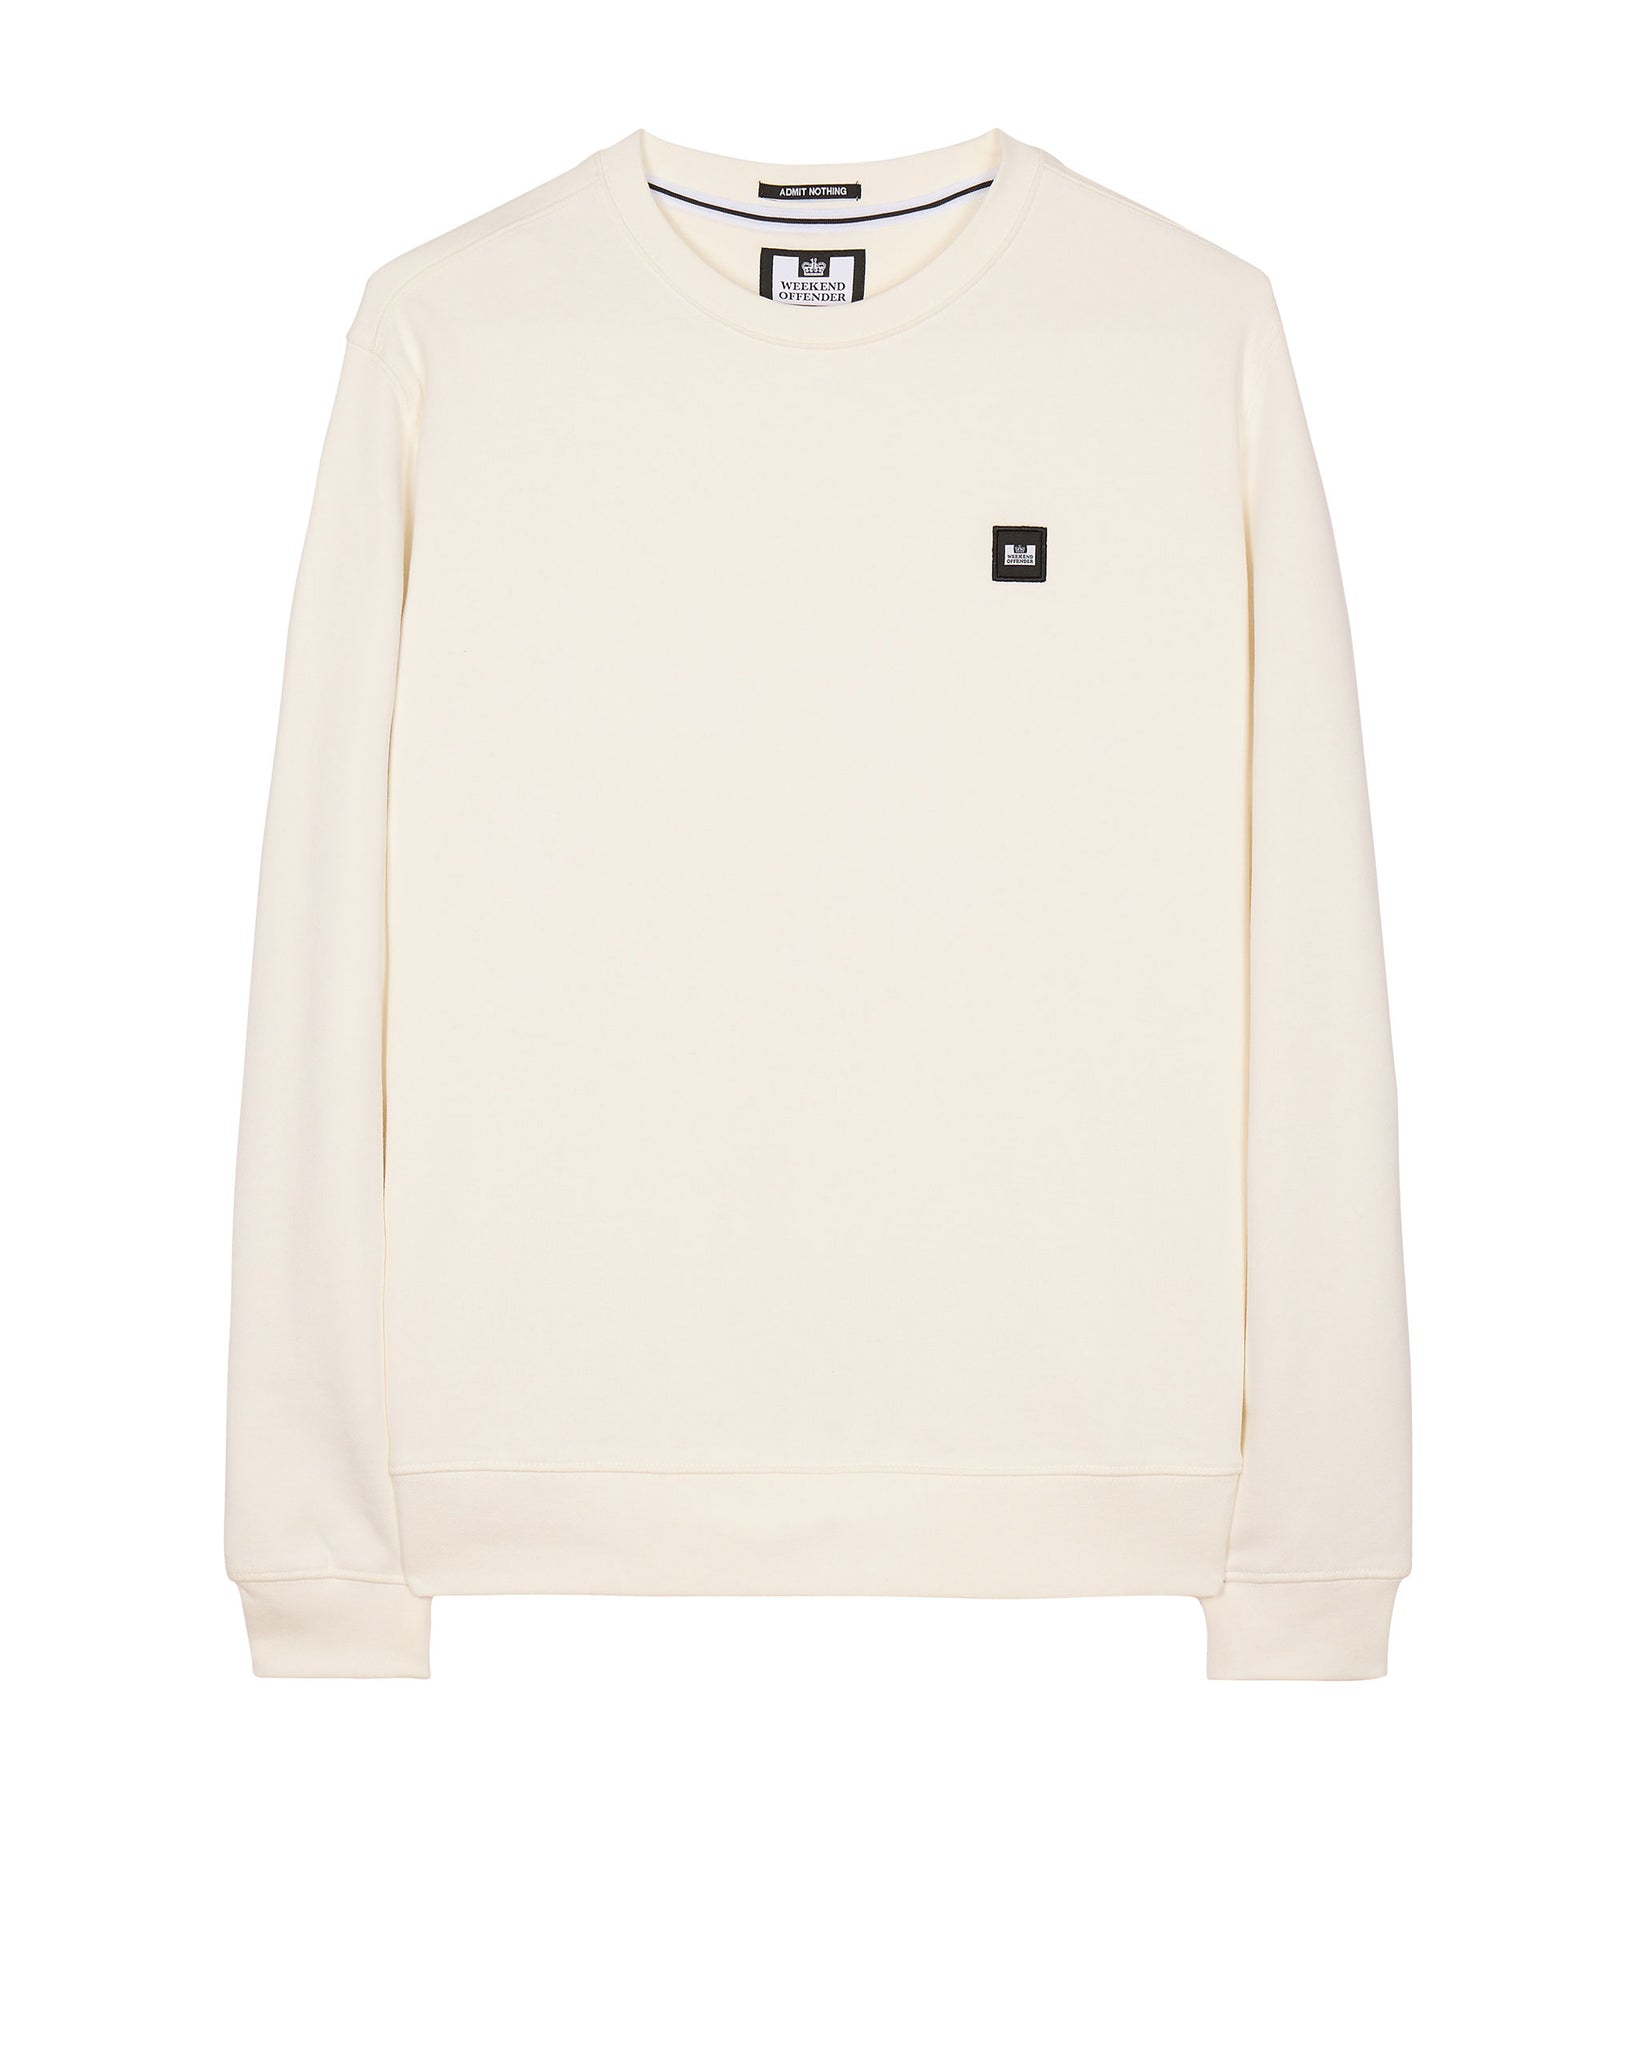 Ferrer Sweatshirt Winter White